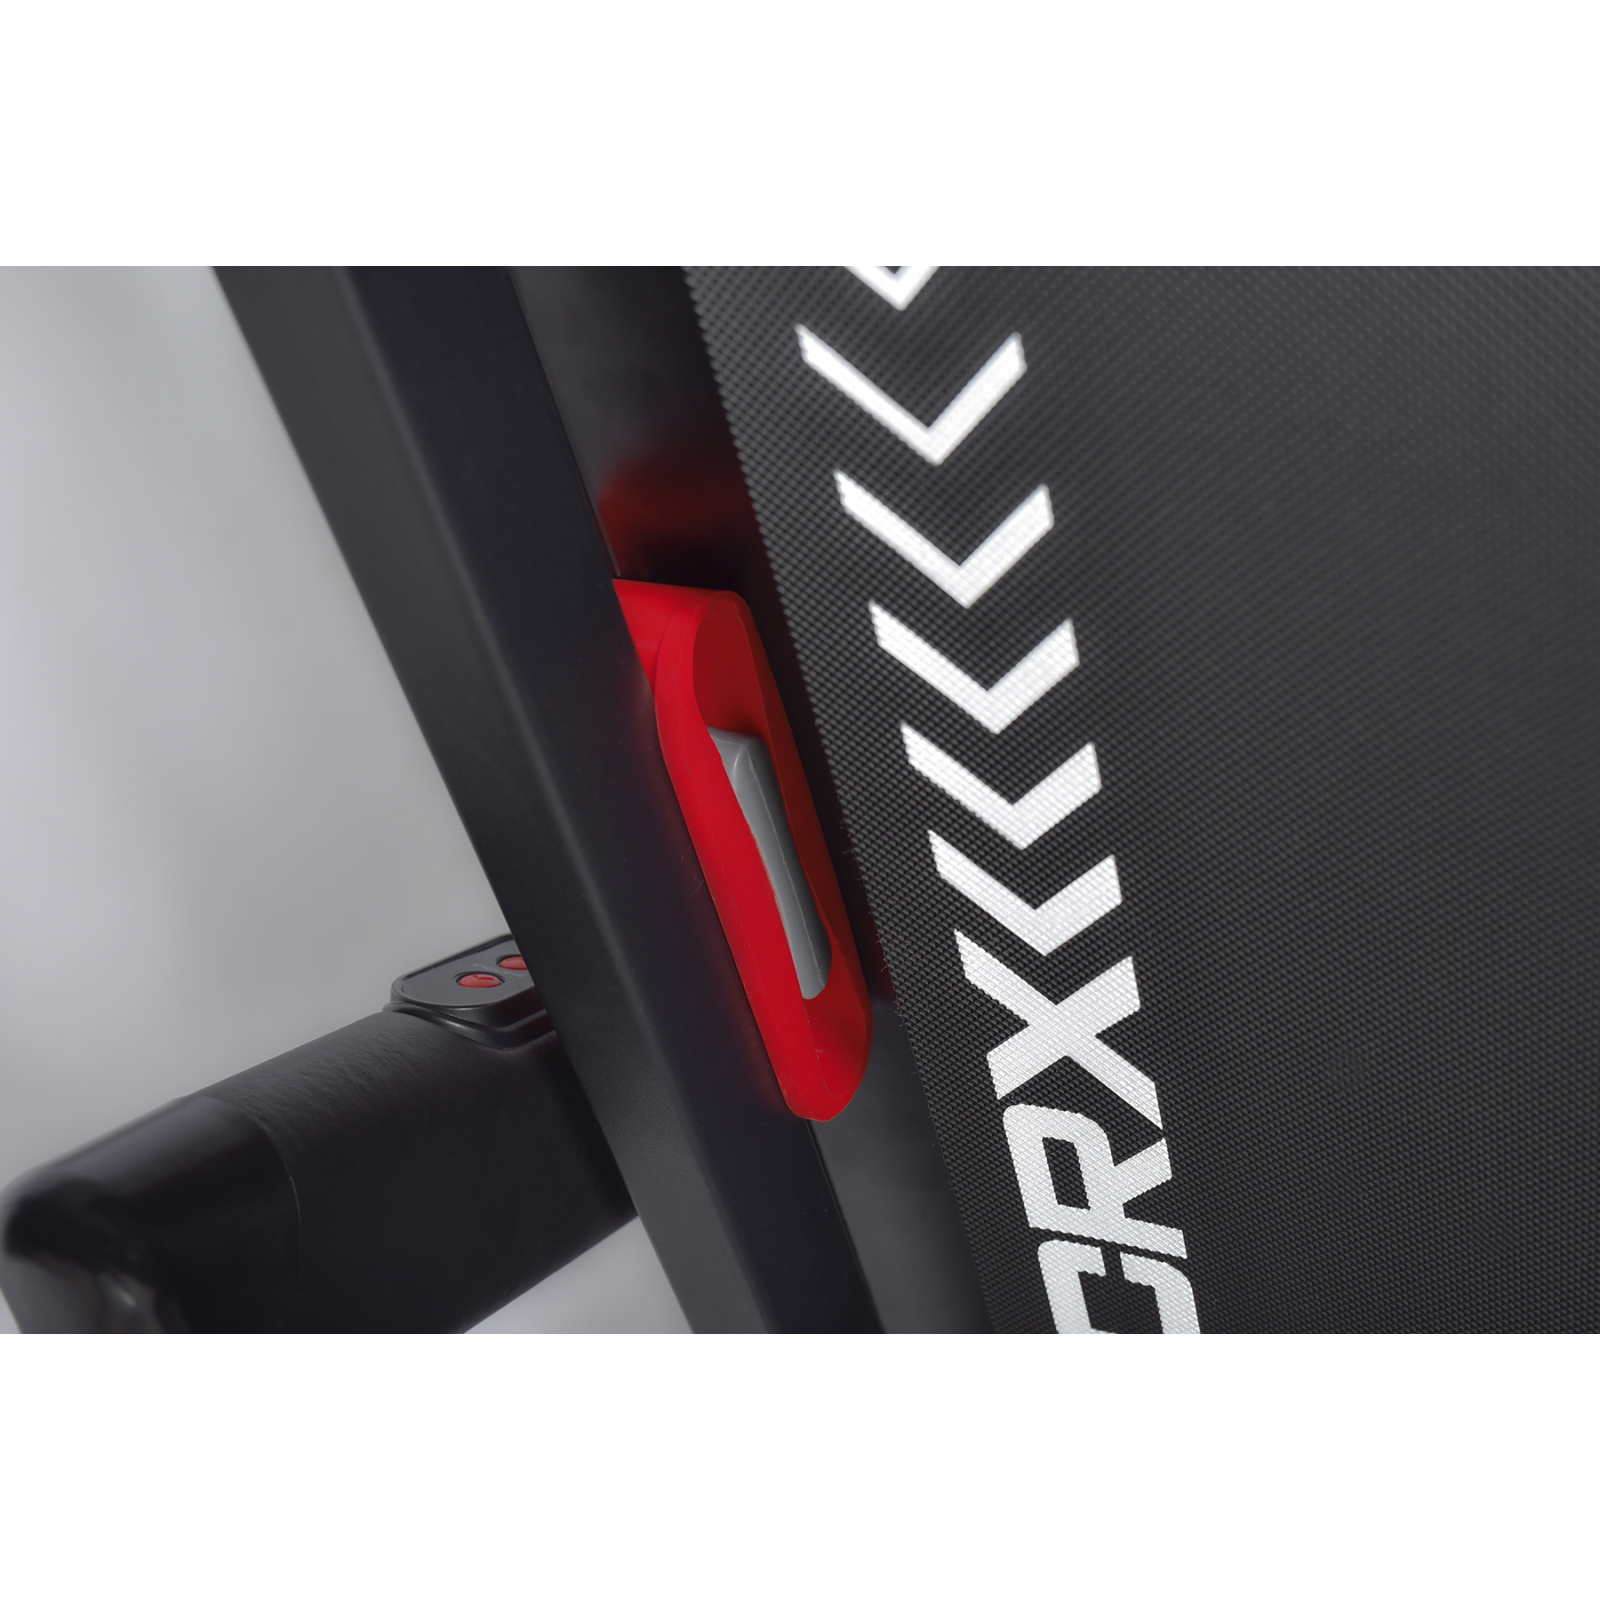 Беговая дорожка Toorx Treadmill Experience (EXPERIENCE) (929872) изображение 10